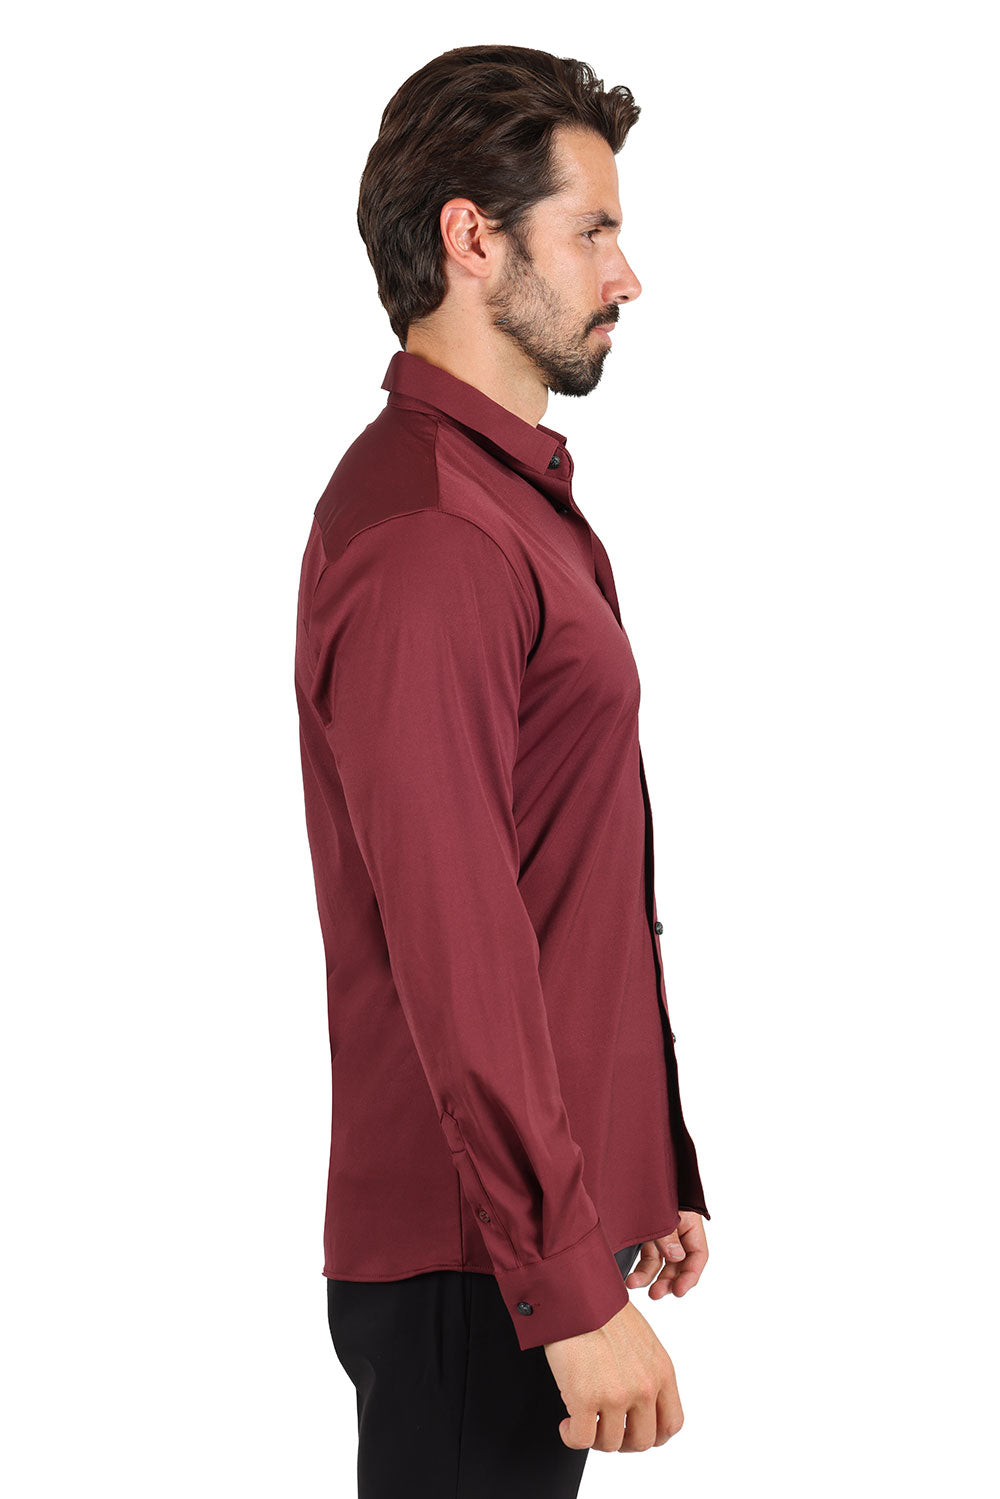 Barabas Men's Premium No Stitches Long Sleeves Shirts 2B400 Burgundy